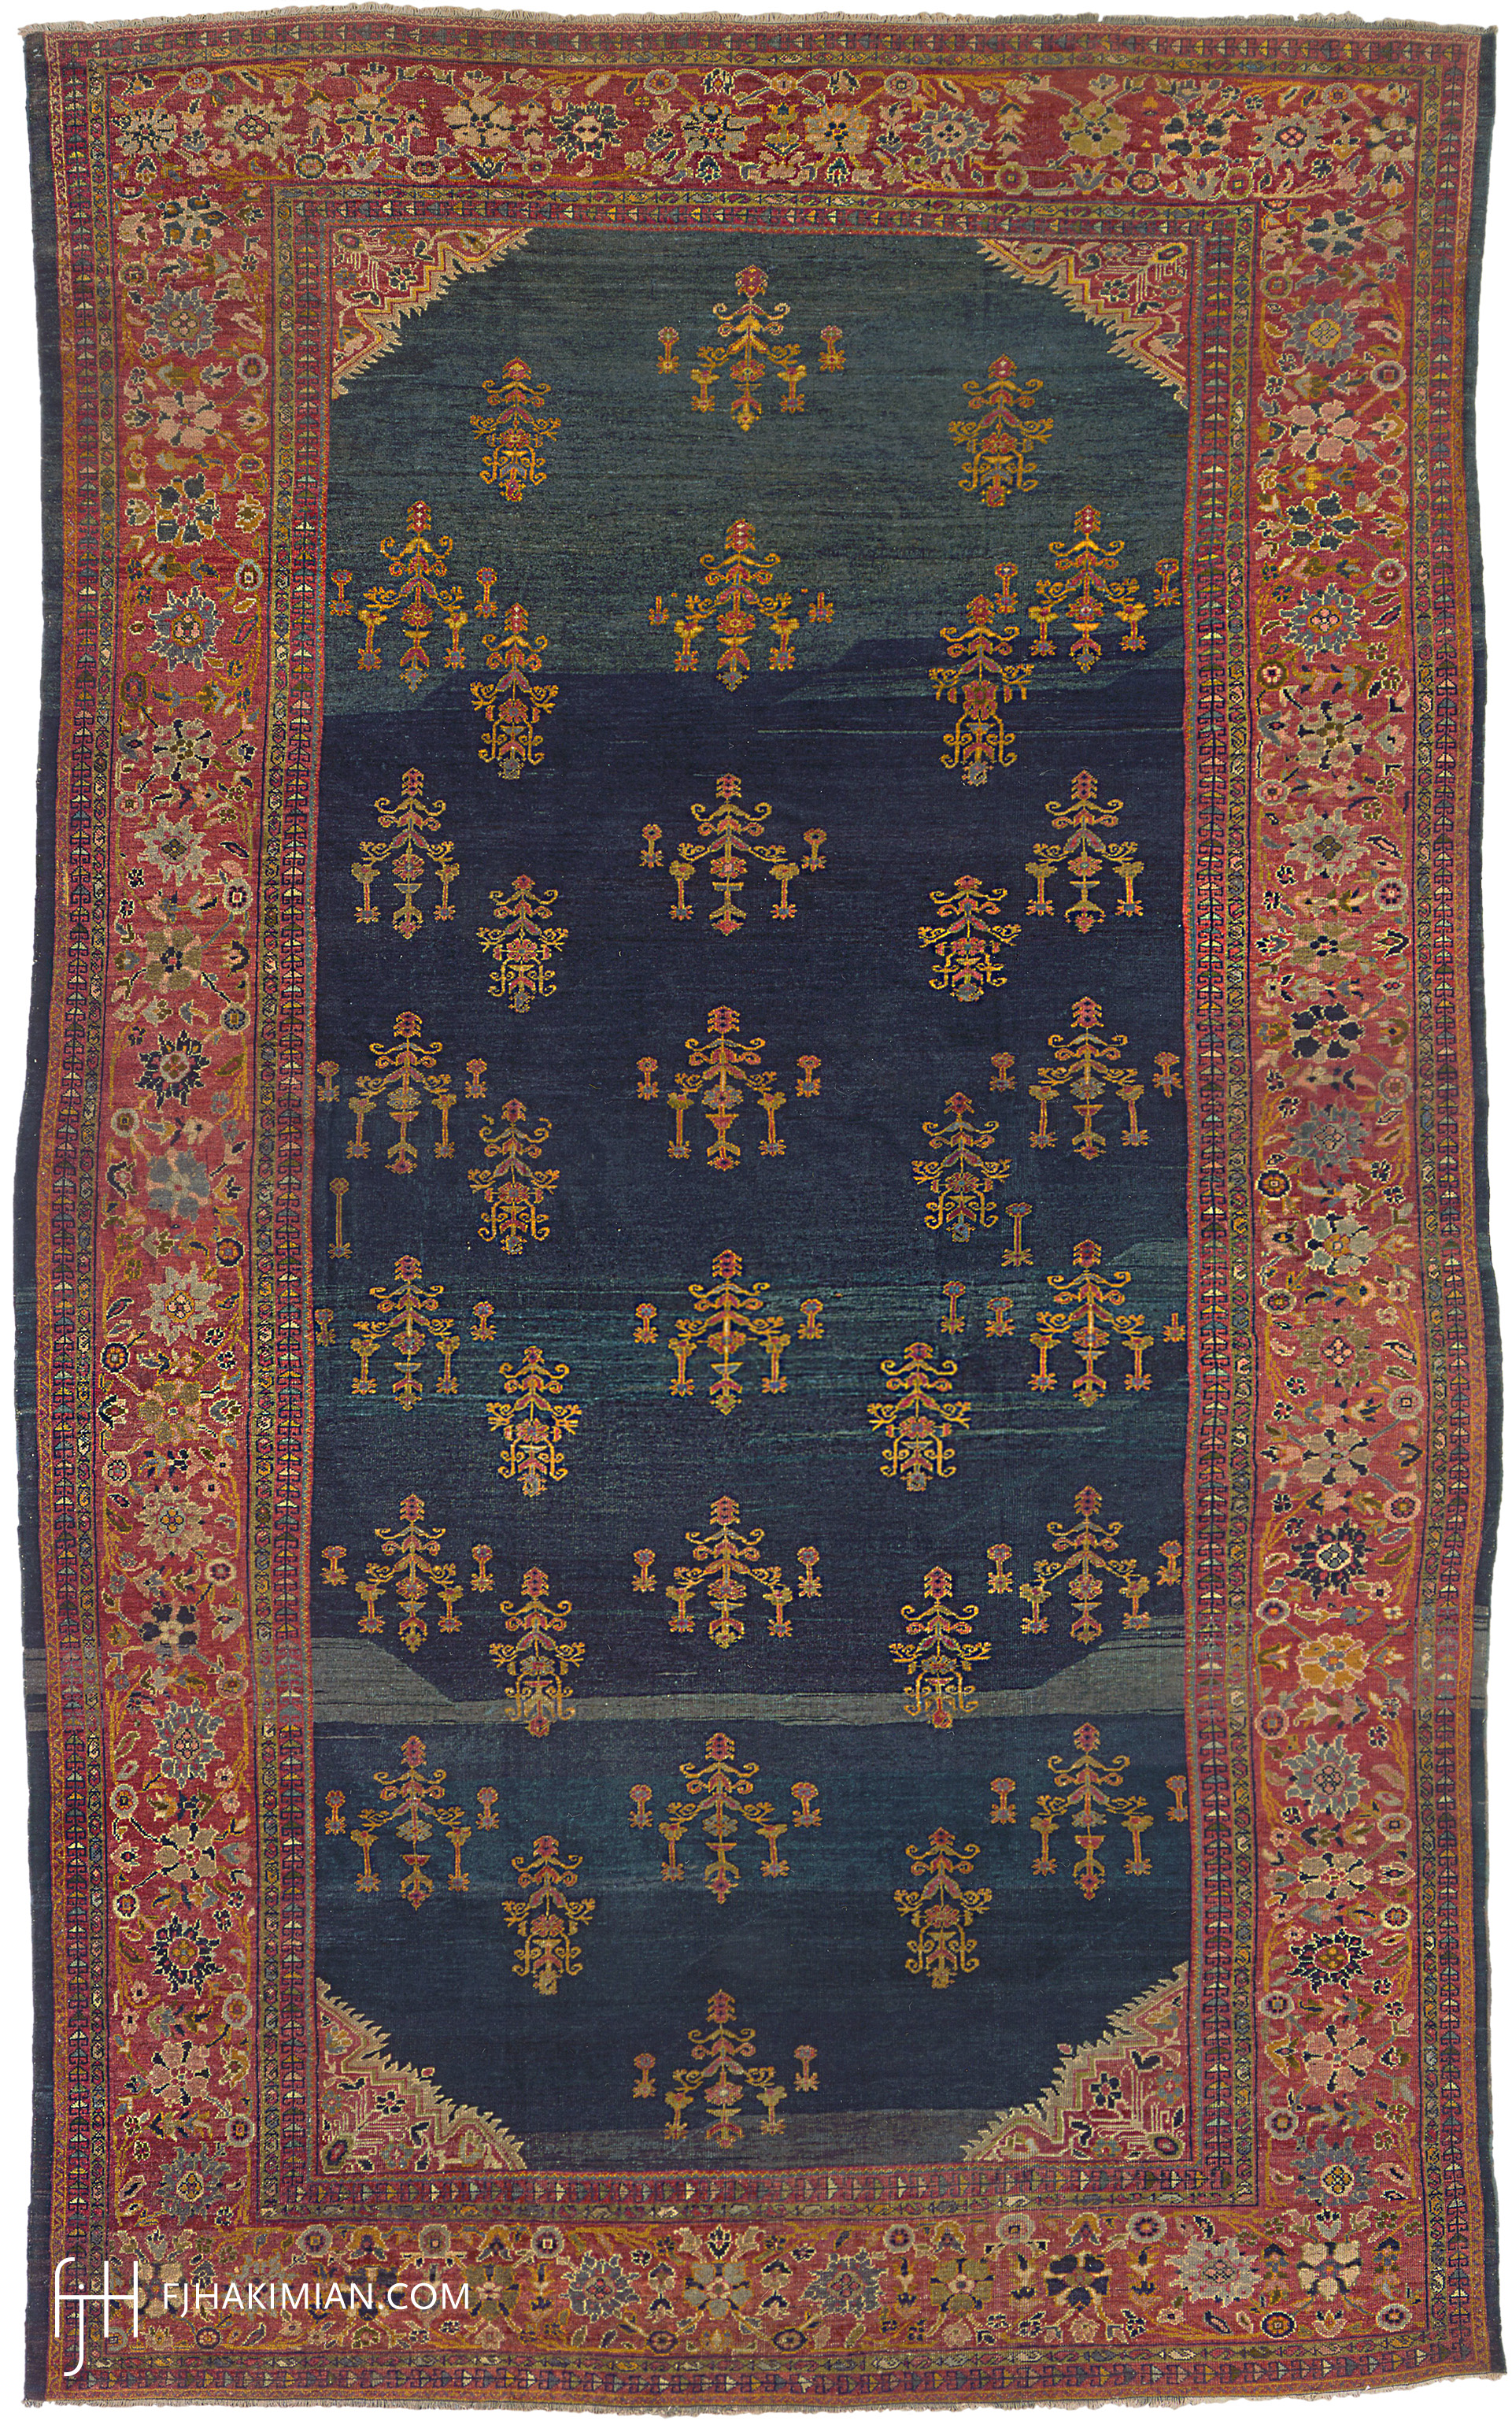 FJ Hakimian | 06156 | Antique Carpet